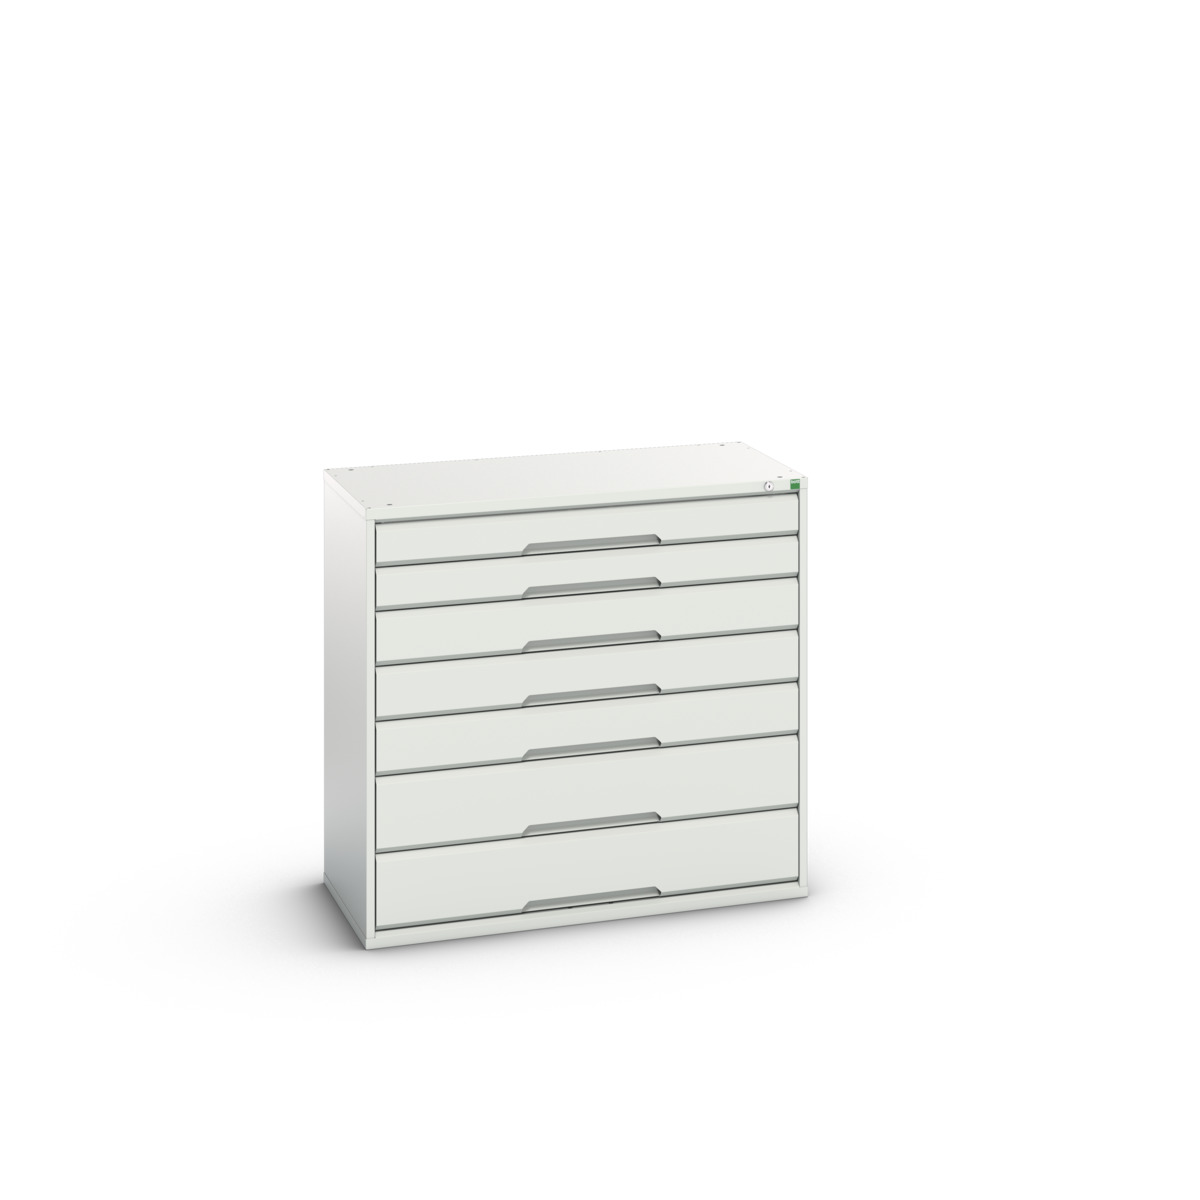 16925249.16 - verso drawer cabinet